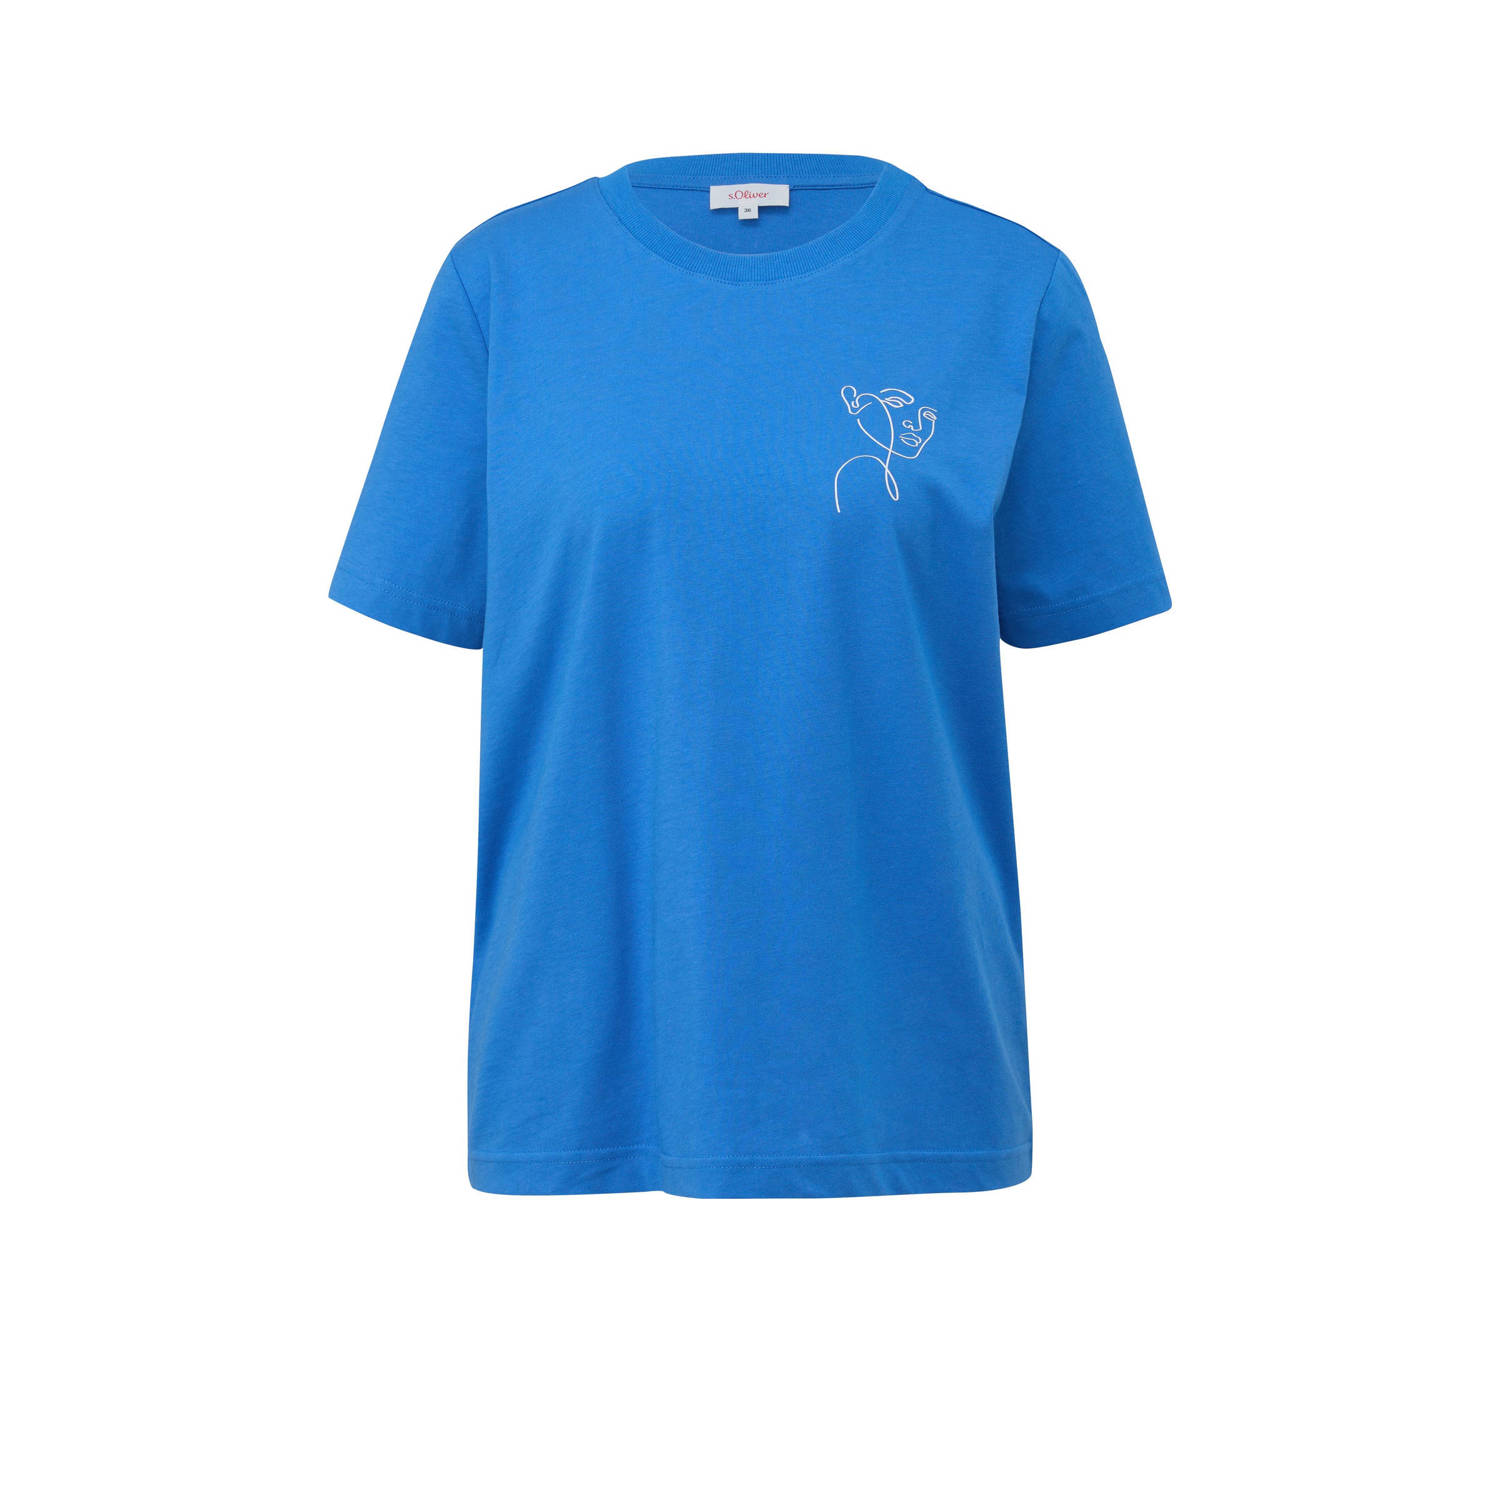 S.Oliver T-shirt met printopdruk blauw wit